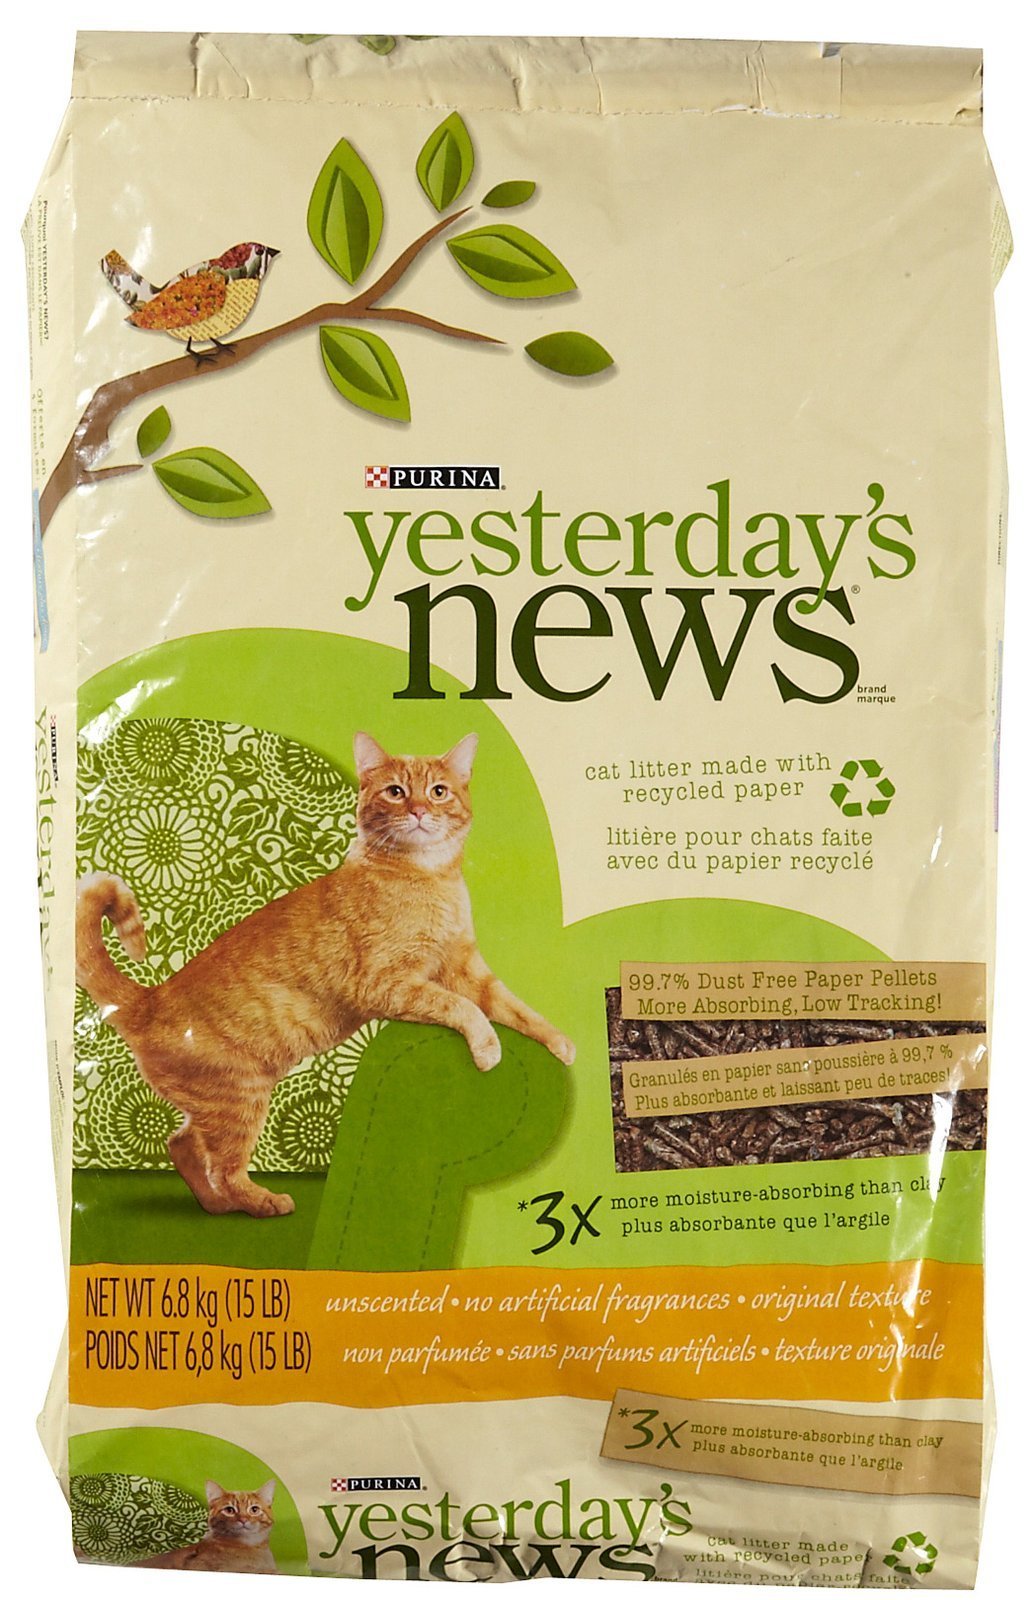 Yesterday's News Original Cat Litter (Unscented) [15 Lb] eBay